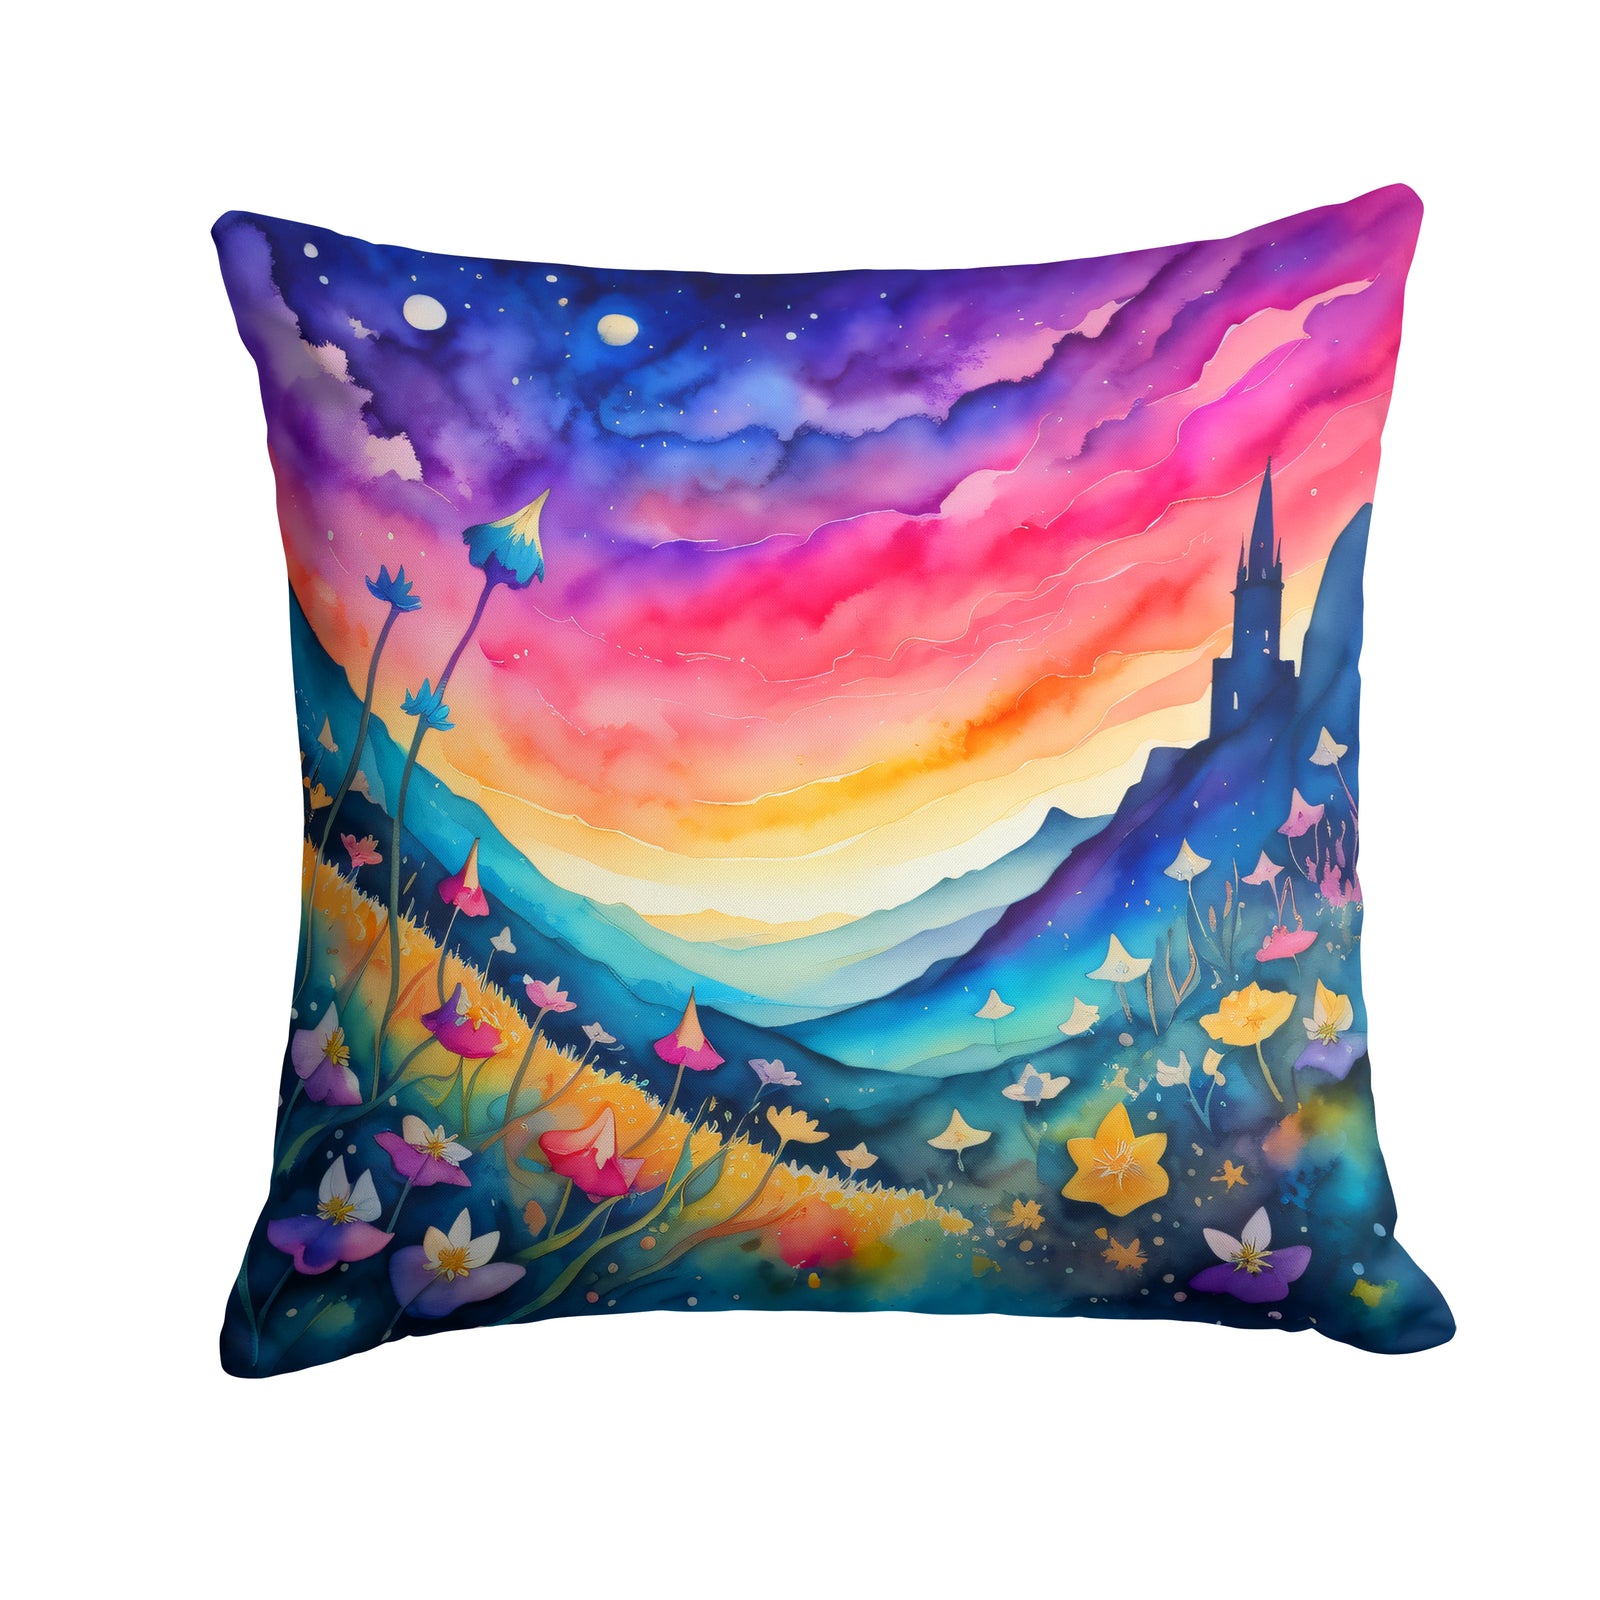 Buy this Colorful Campanula Fabric Decorative Pillow